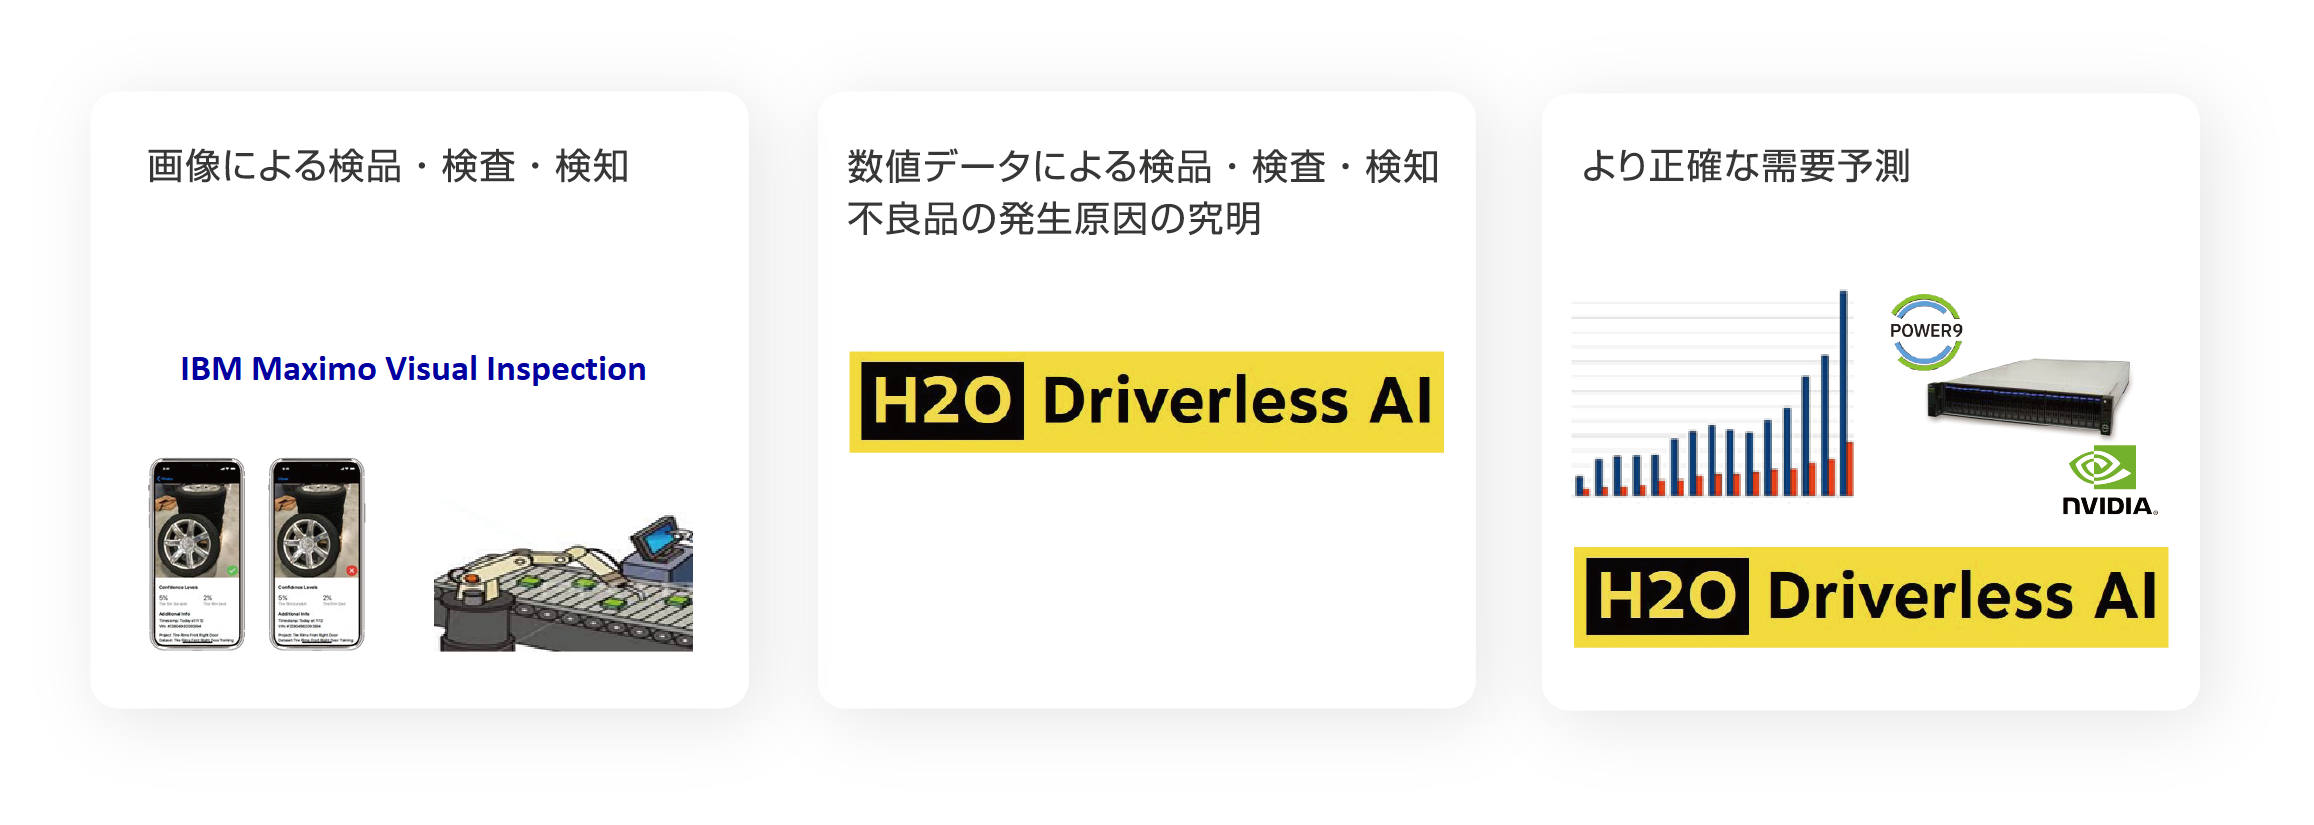 IBM Maximo Visual Inspection,  H20 Driverless AI 